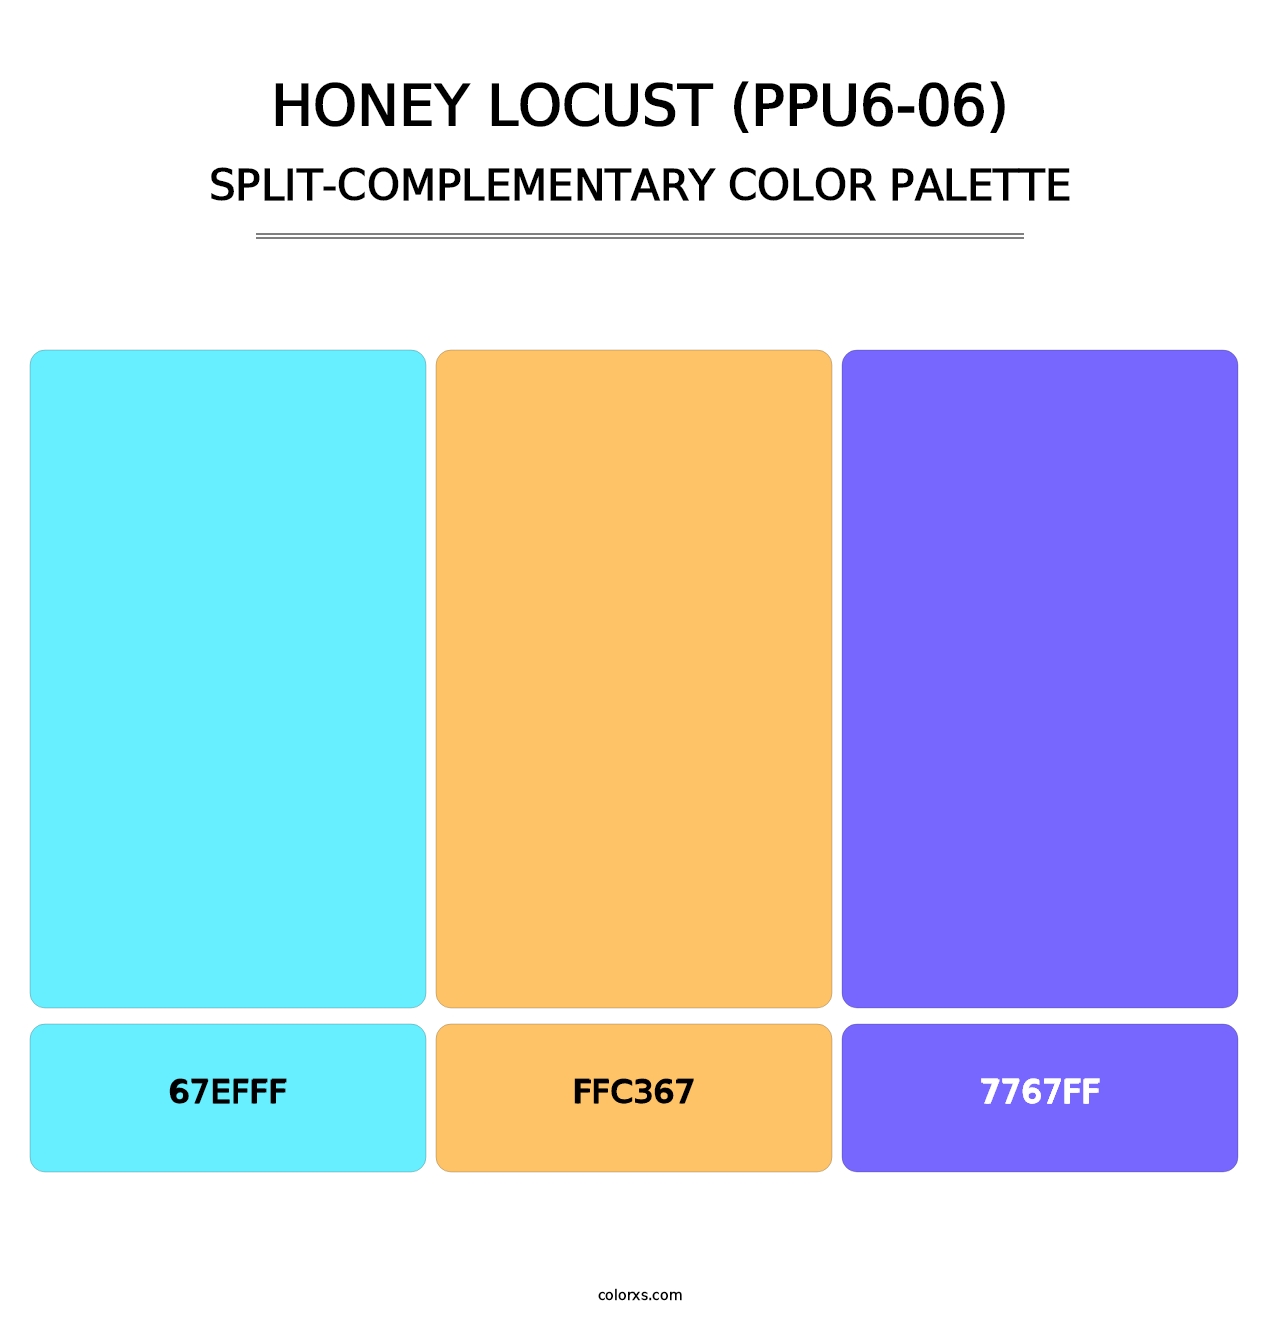 Honey Locust (PPU6-06) - Split-Complementary Color Palette